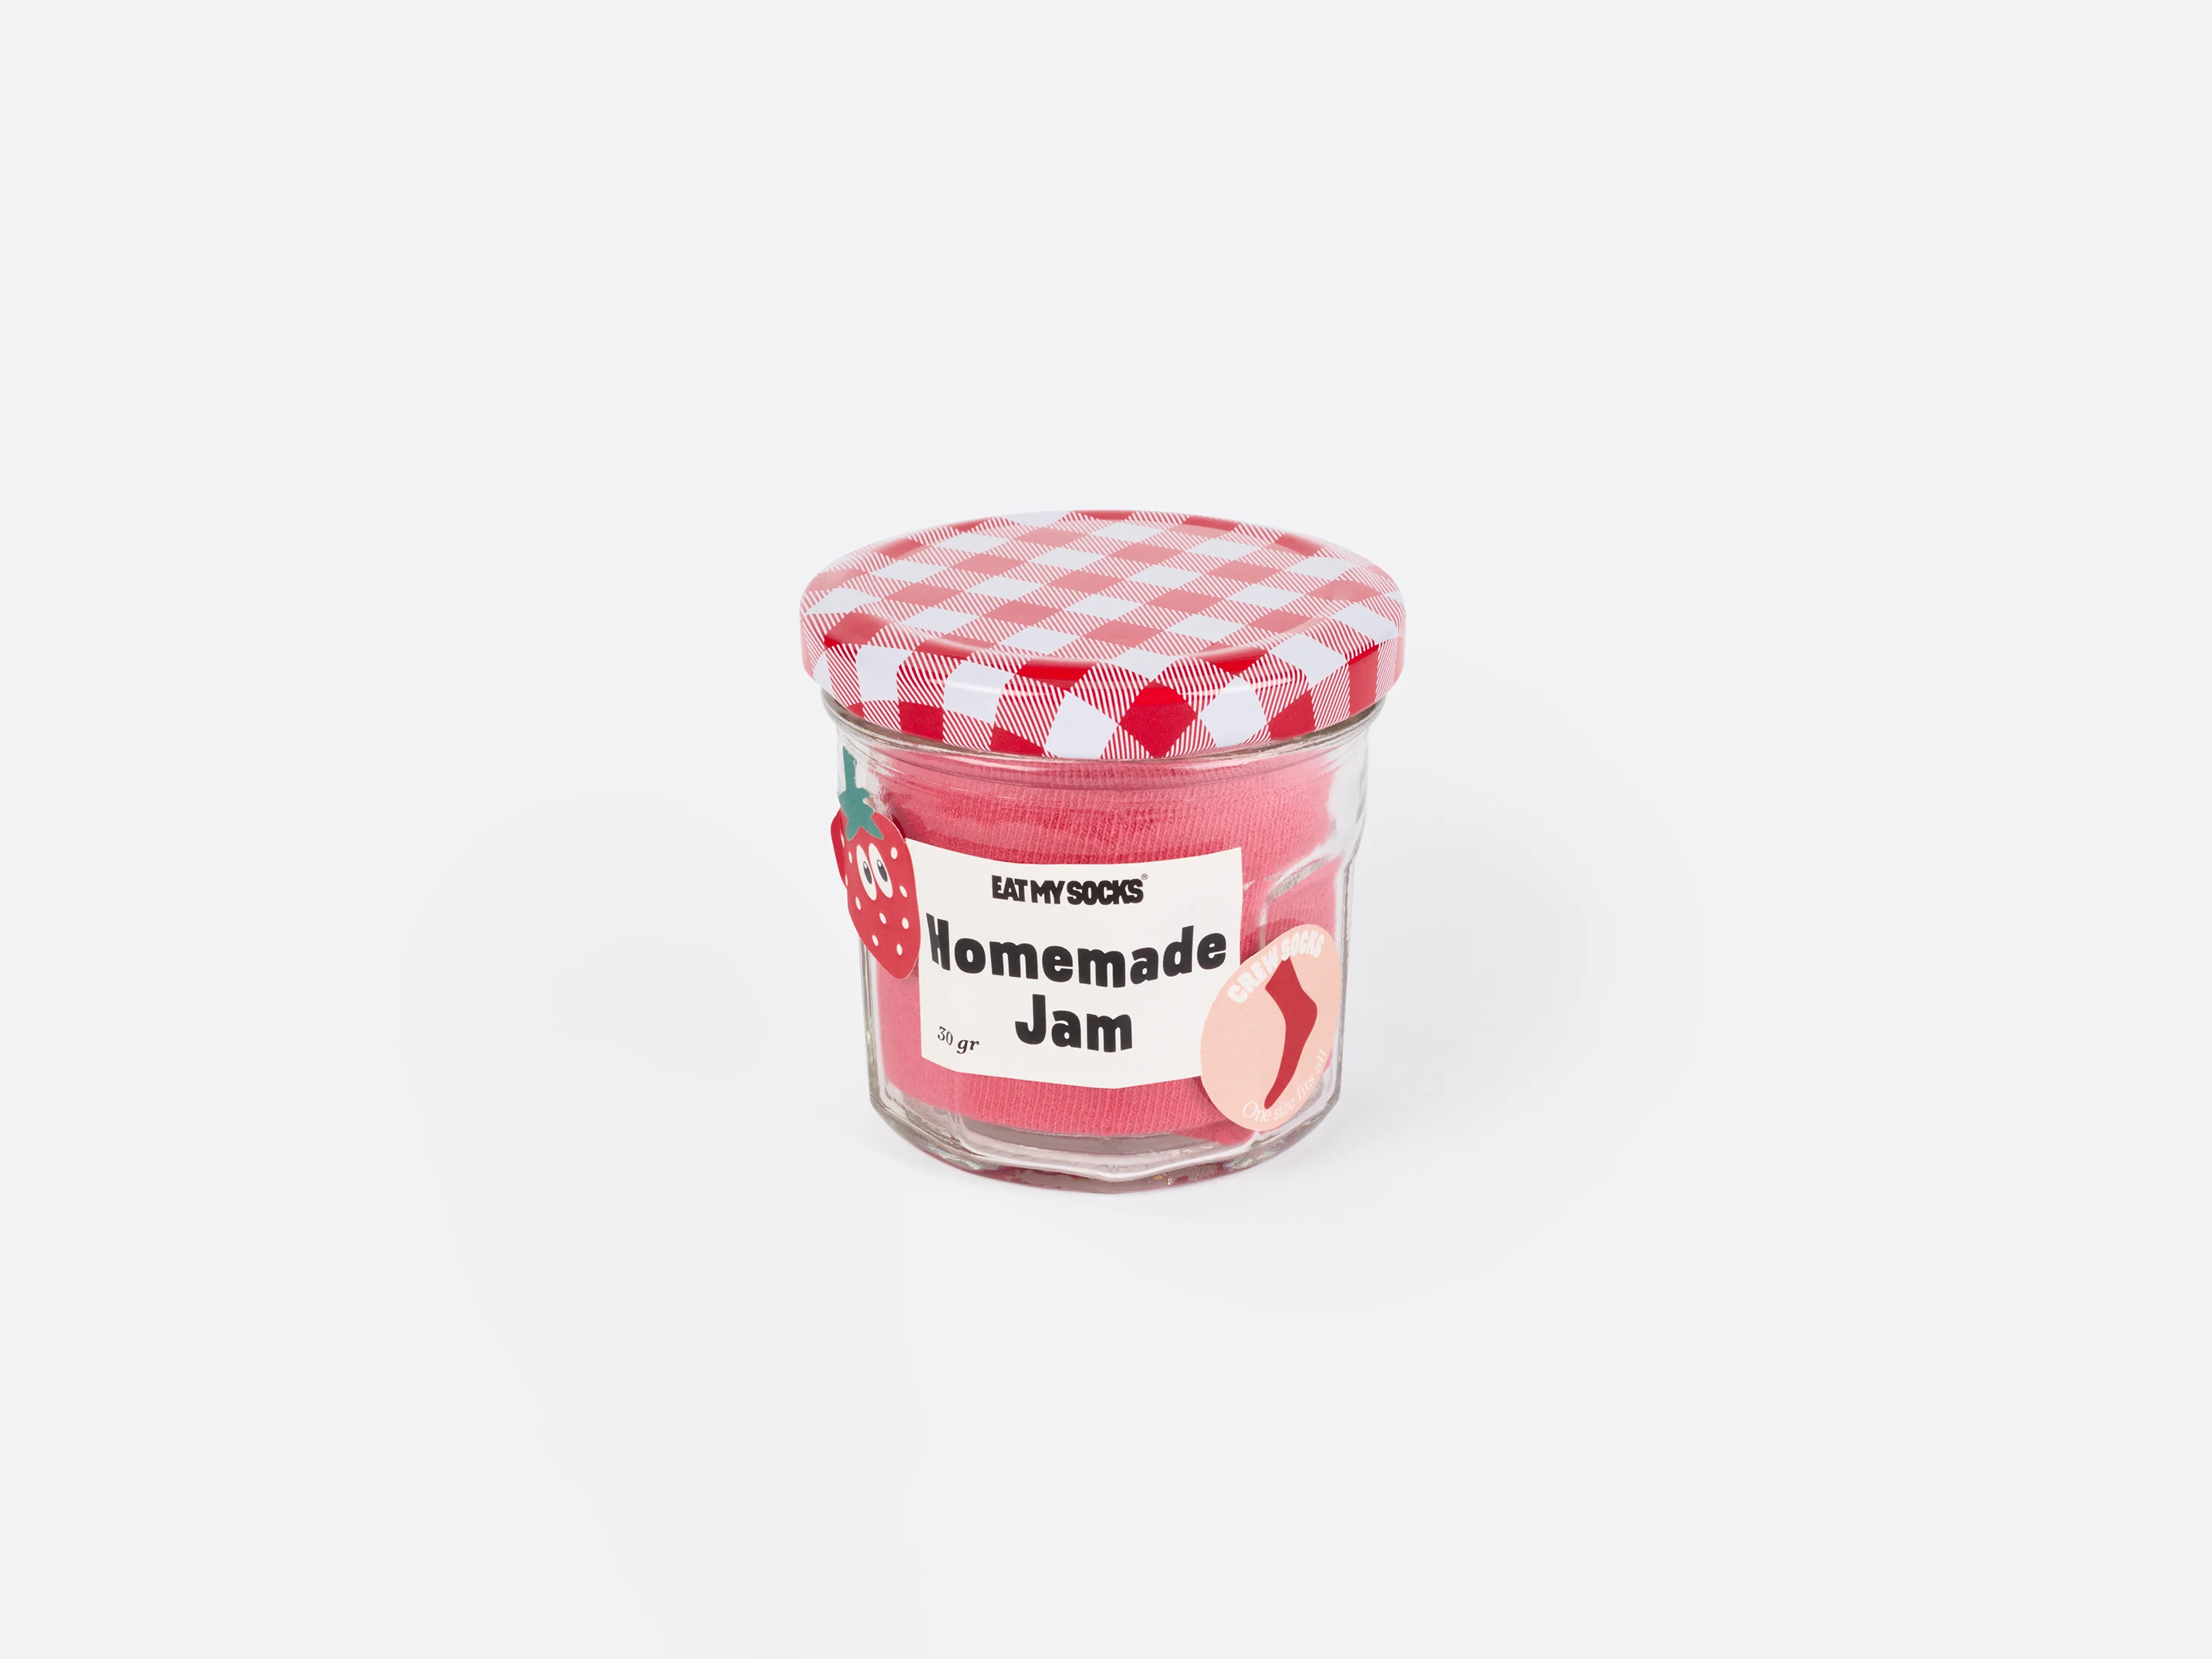 Eat My Socks - Homemade Jam (Strawberry) - One size - Gadgets